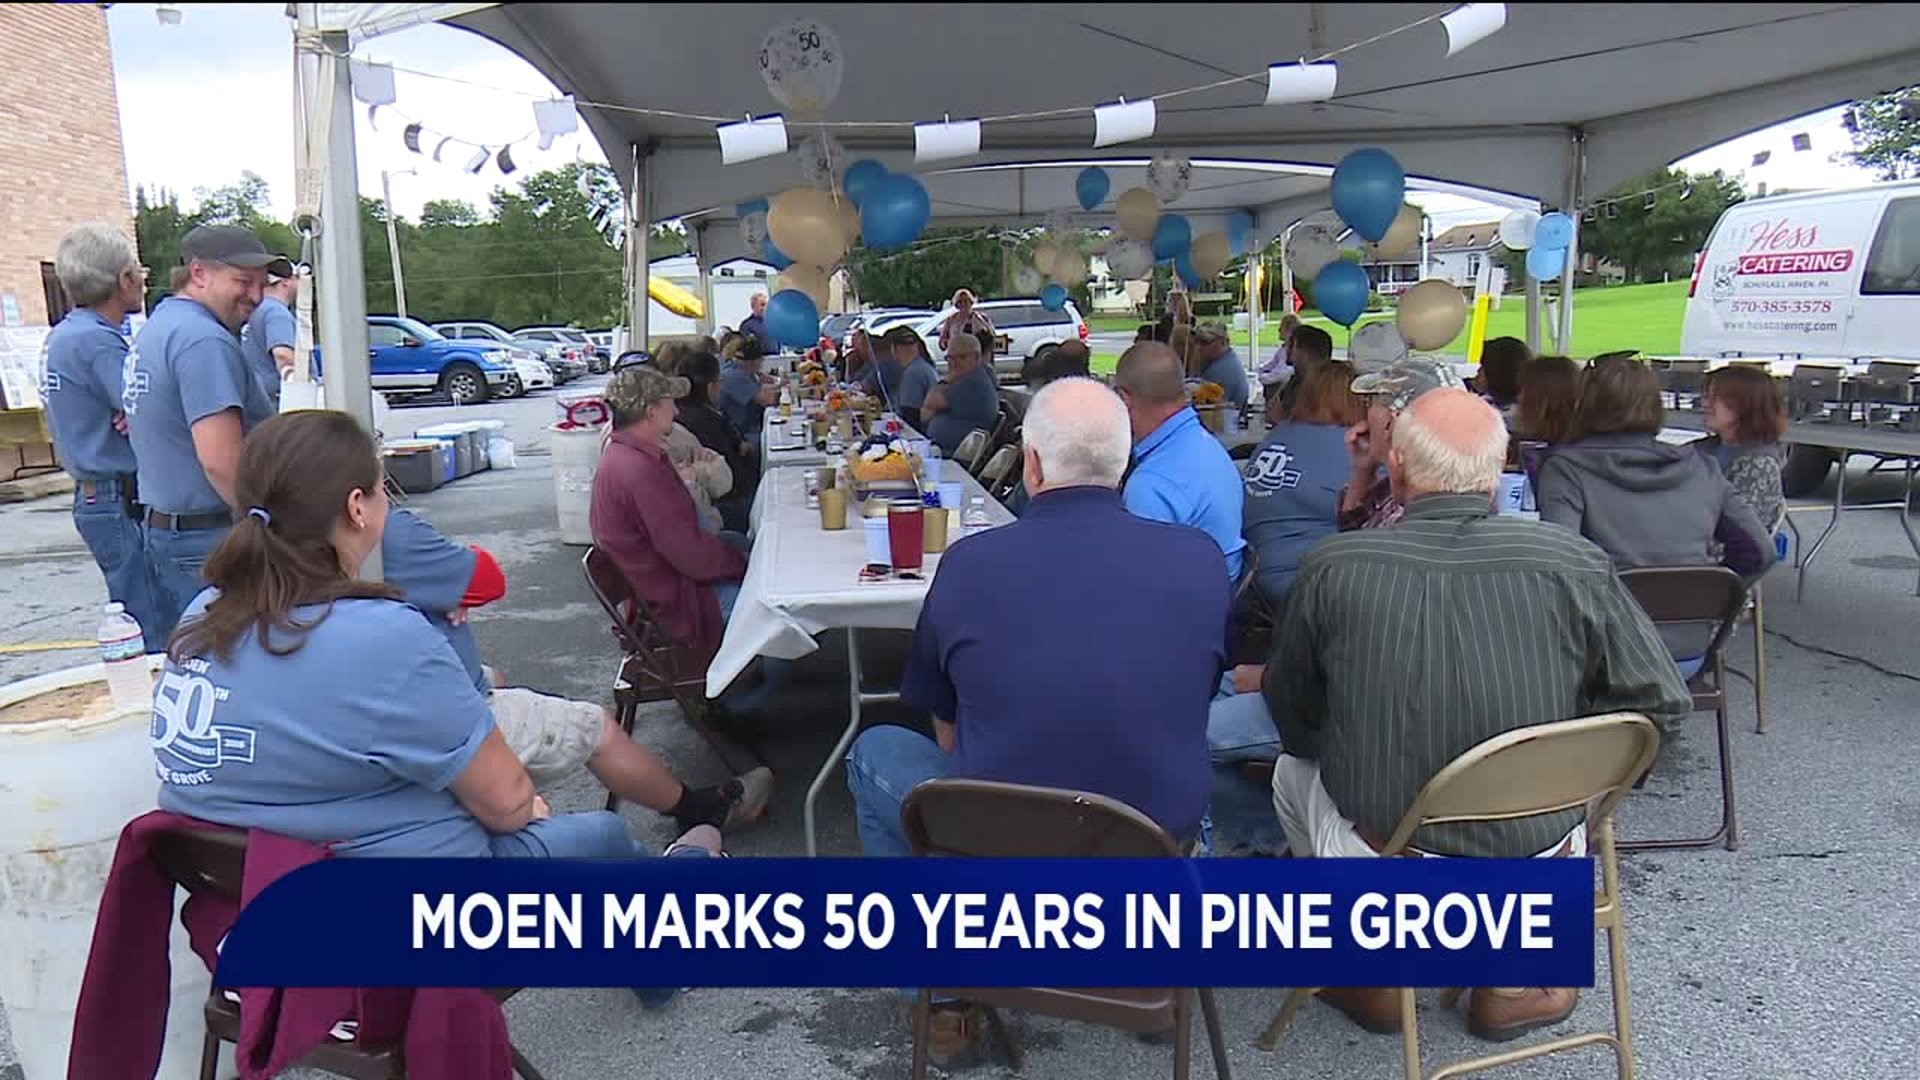 Moen Celebrates 50 Years in Pine Grove